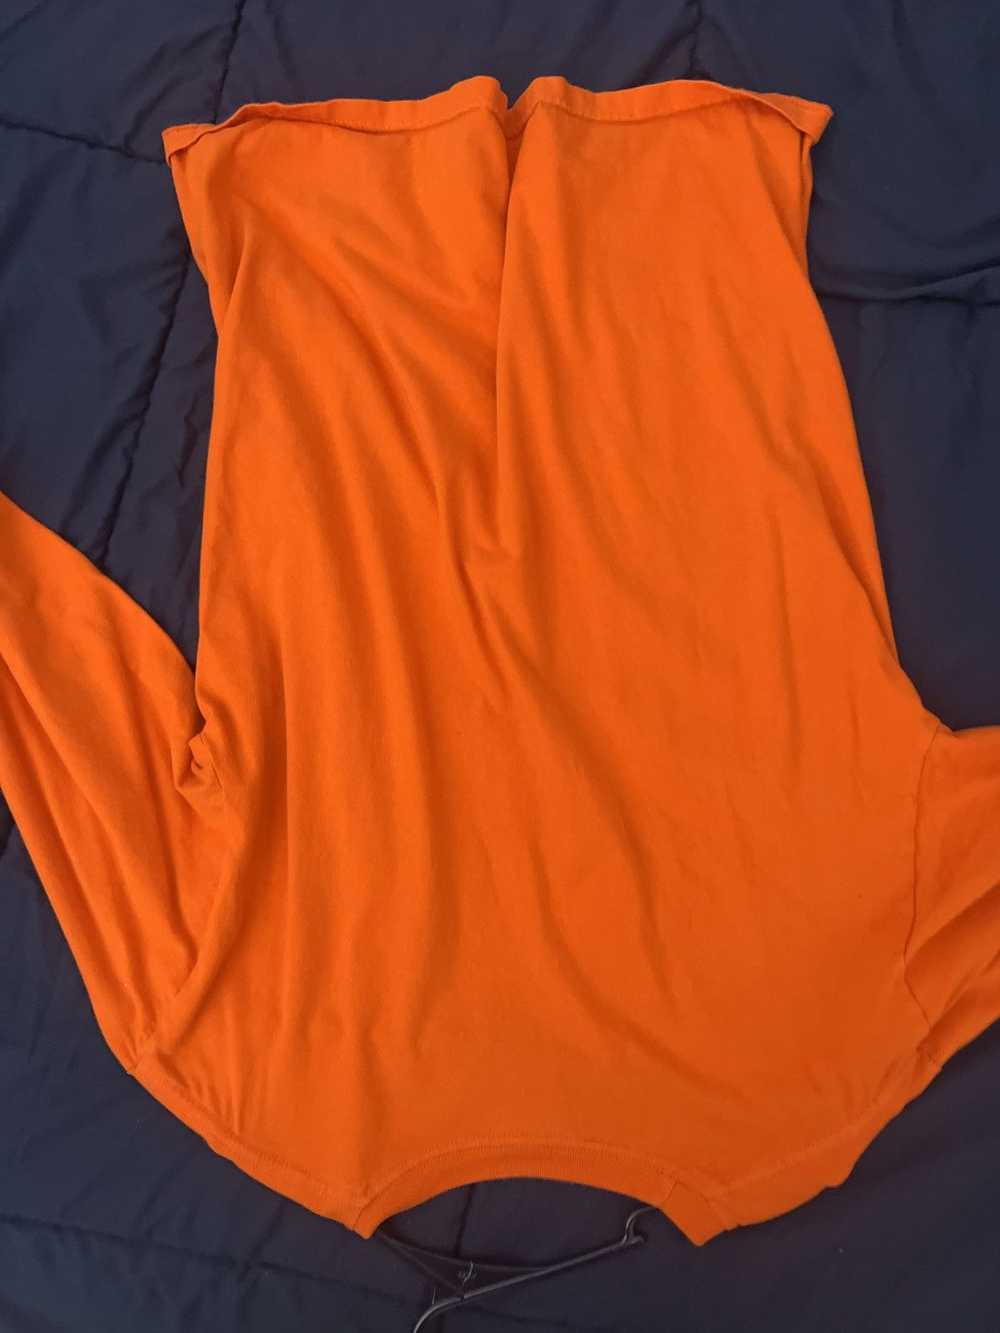 Supreme Supreme orange box logo long sleeve tee - image 4